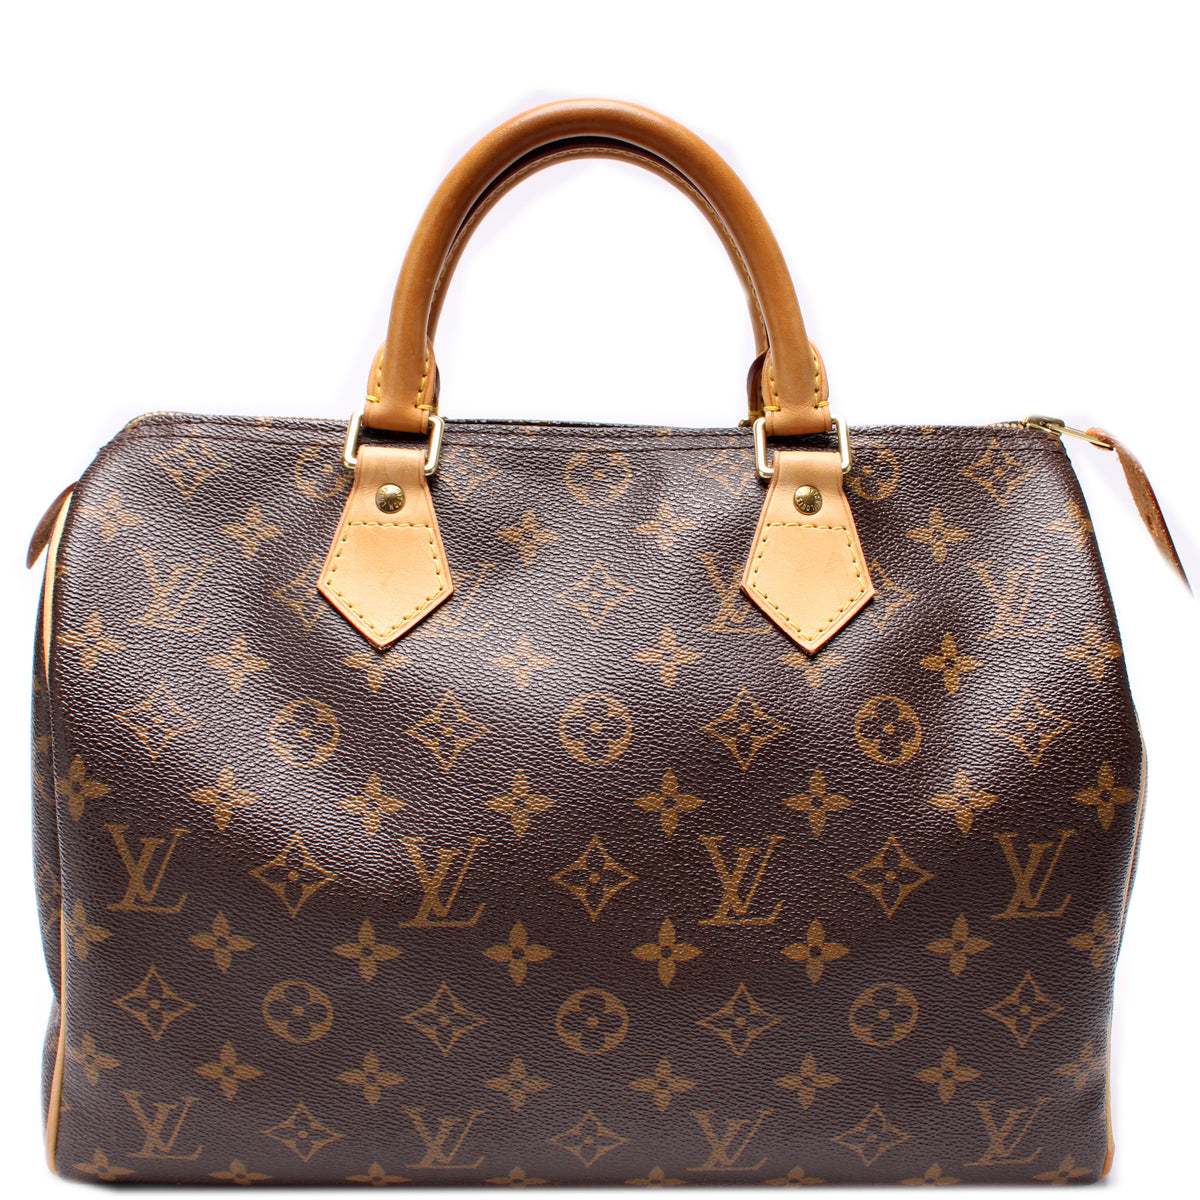 Louis Vuitton Speedy 30 Bag Review